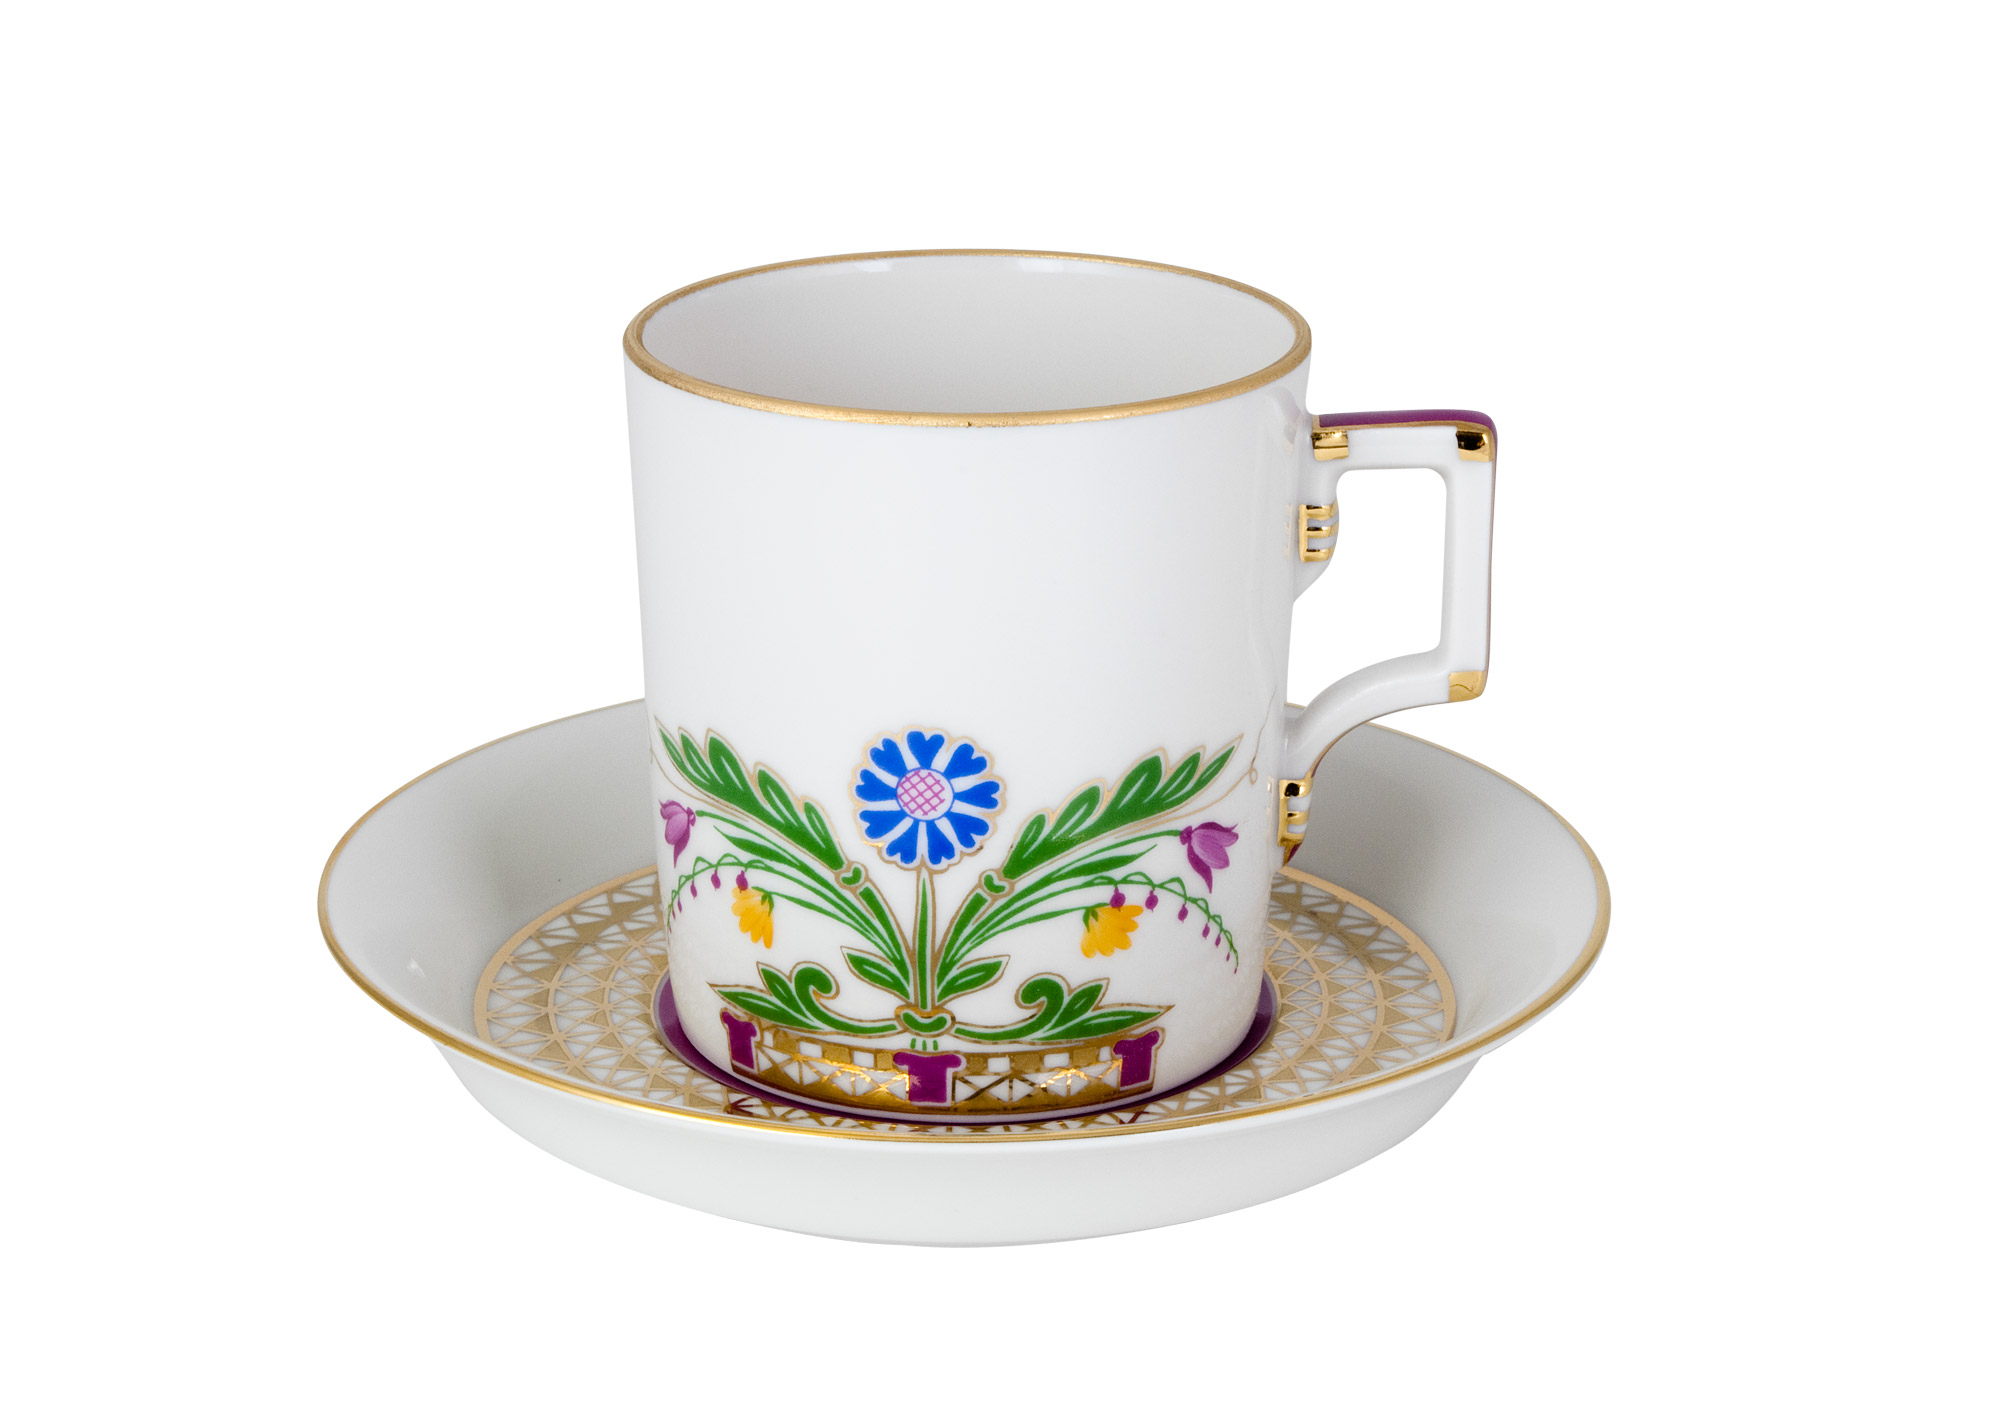 Buy Moscow River Flowers Porcelain Cup & Saucer at GoldenCockerel.com